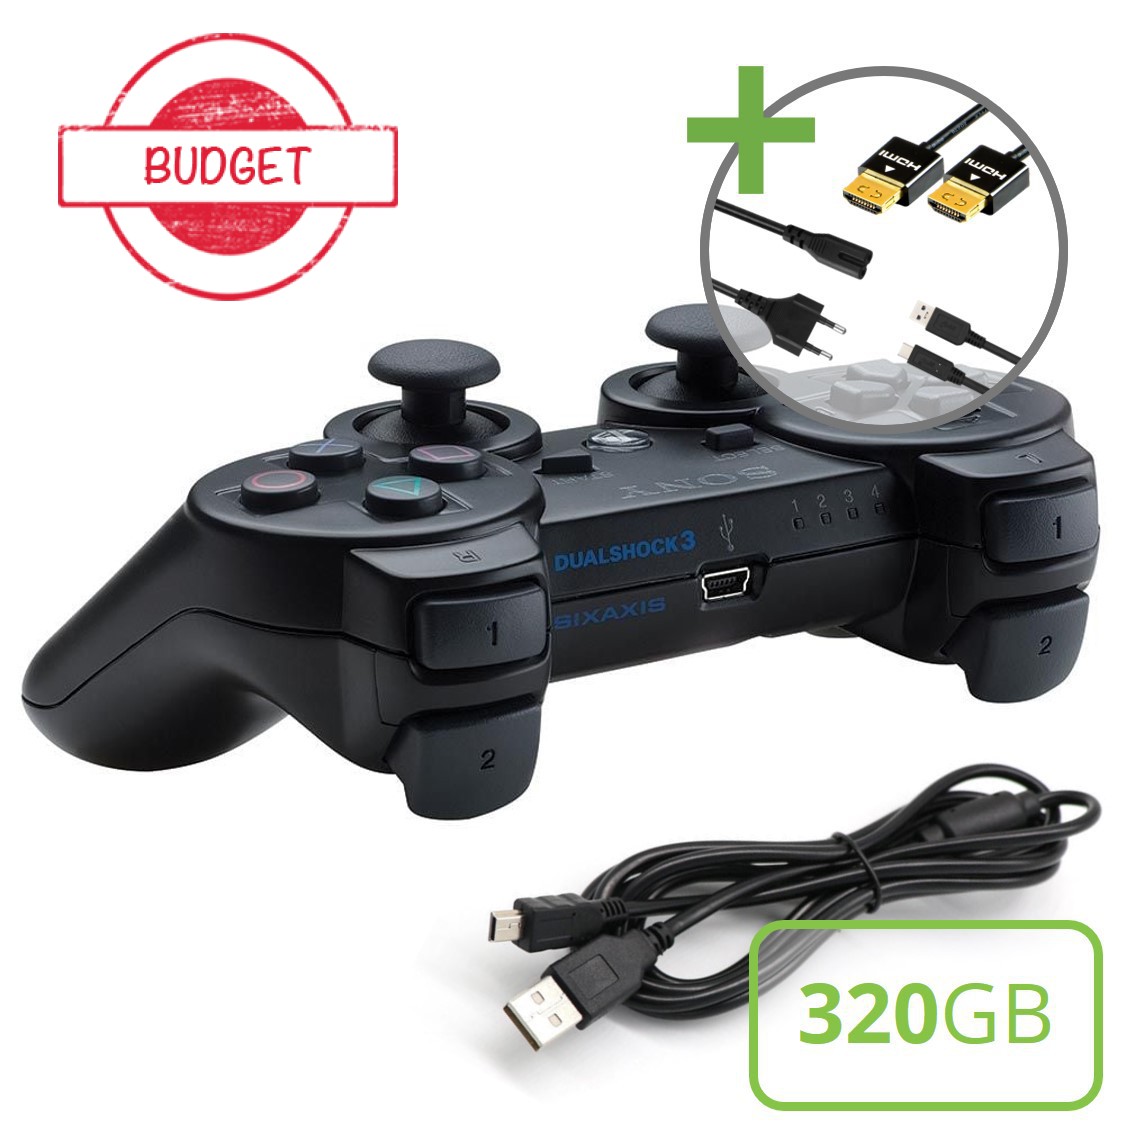 Sony PlayStation 3 Slim (320GB) Starter Pack - DualShock Edition - Budget - Playstation 3 Hardware - 4